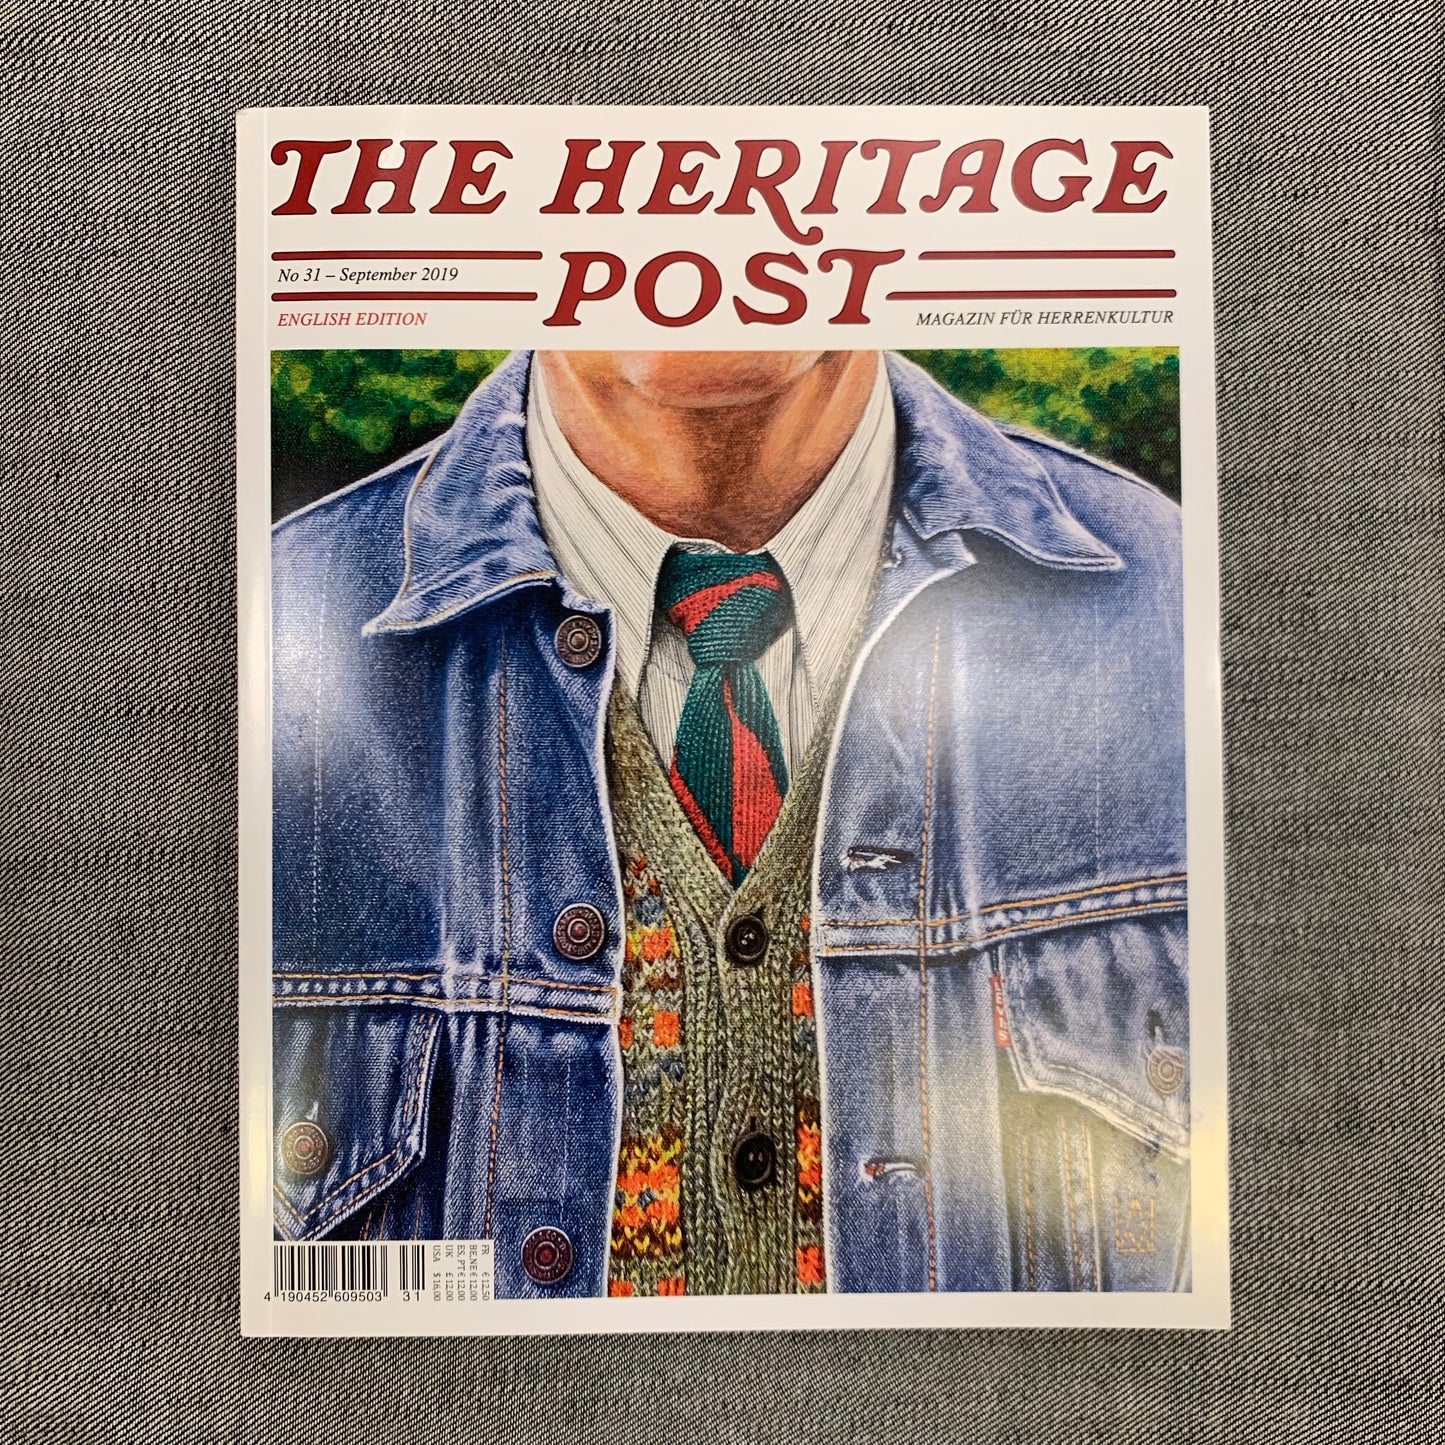 The Heritage Post - vol 31